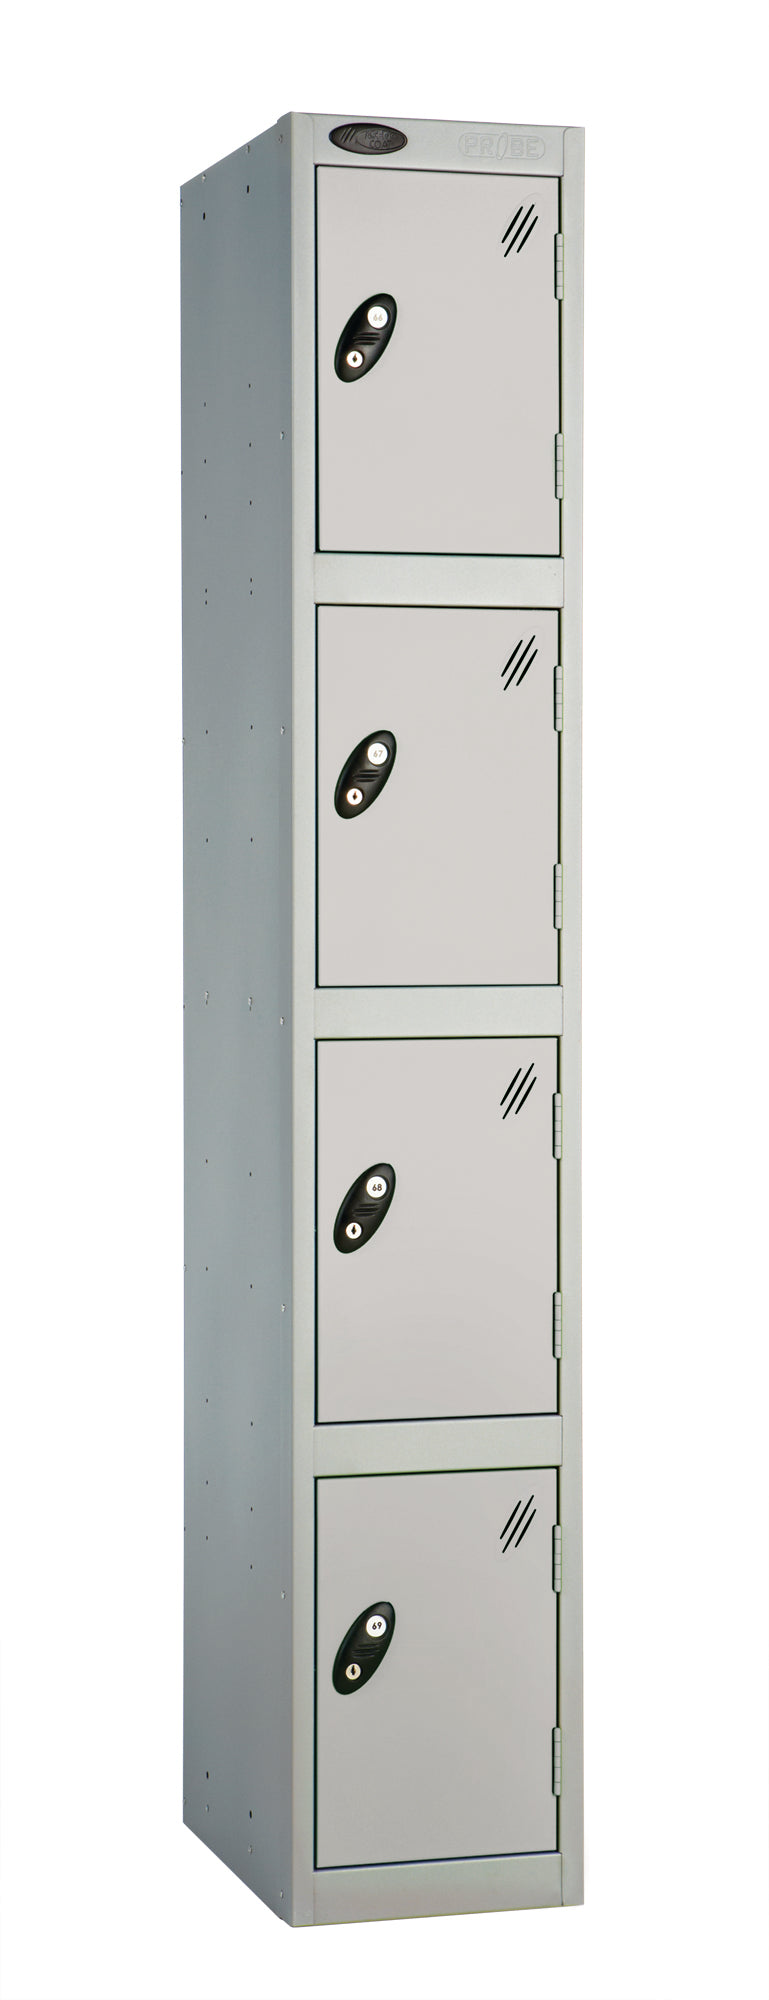 PROBEBOX STANDARD 1 NEST STEEL LOCKERS - DUST SILVER 4 DOOR Storage Lockers > Lockers > Cabinets > Storage > Probe > One Stop For Safety   